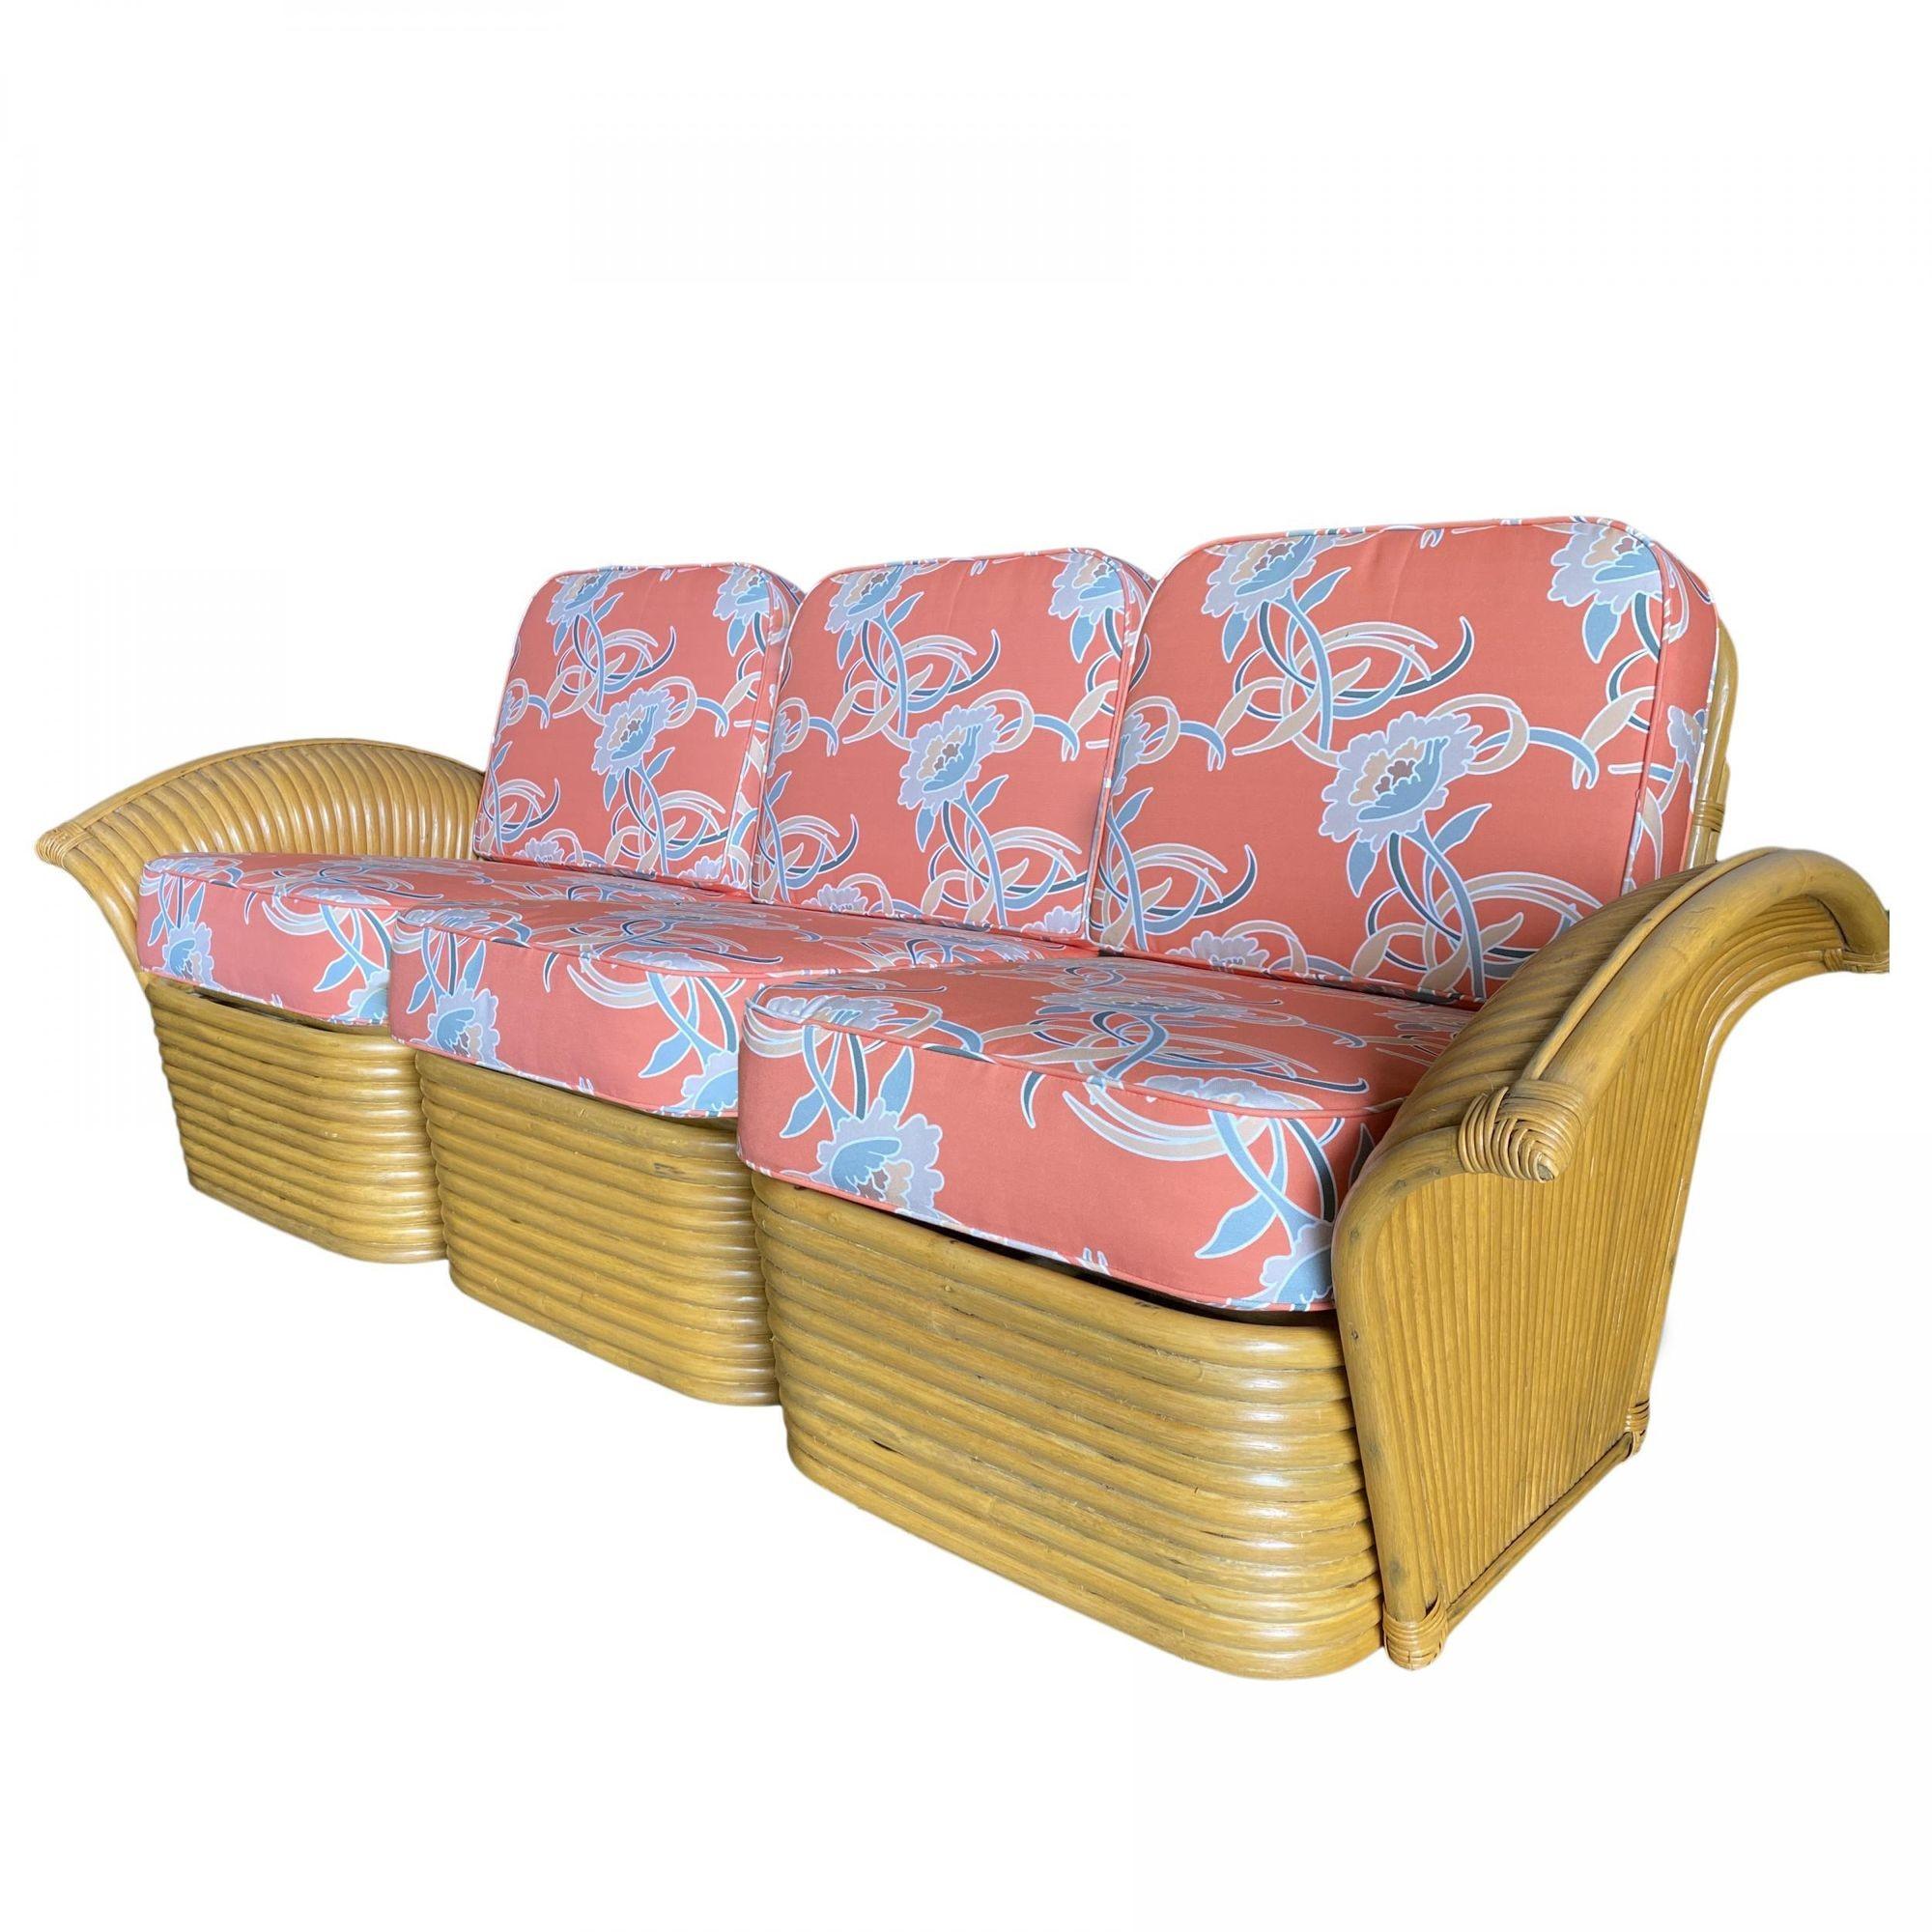 Original 1930s Rattan Fan 3 seat sofa with the same fabric as seen in original 